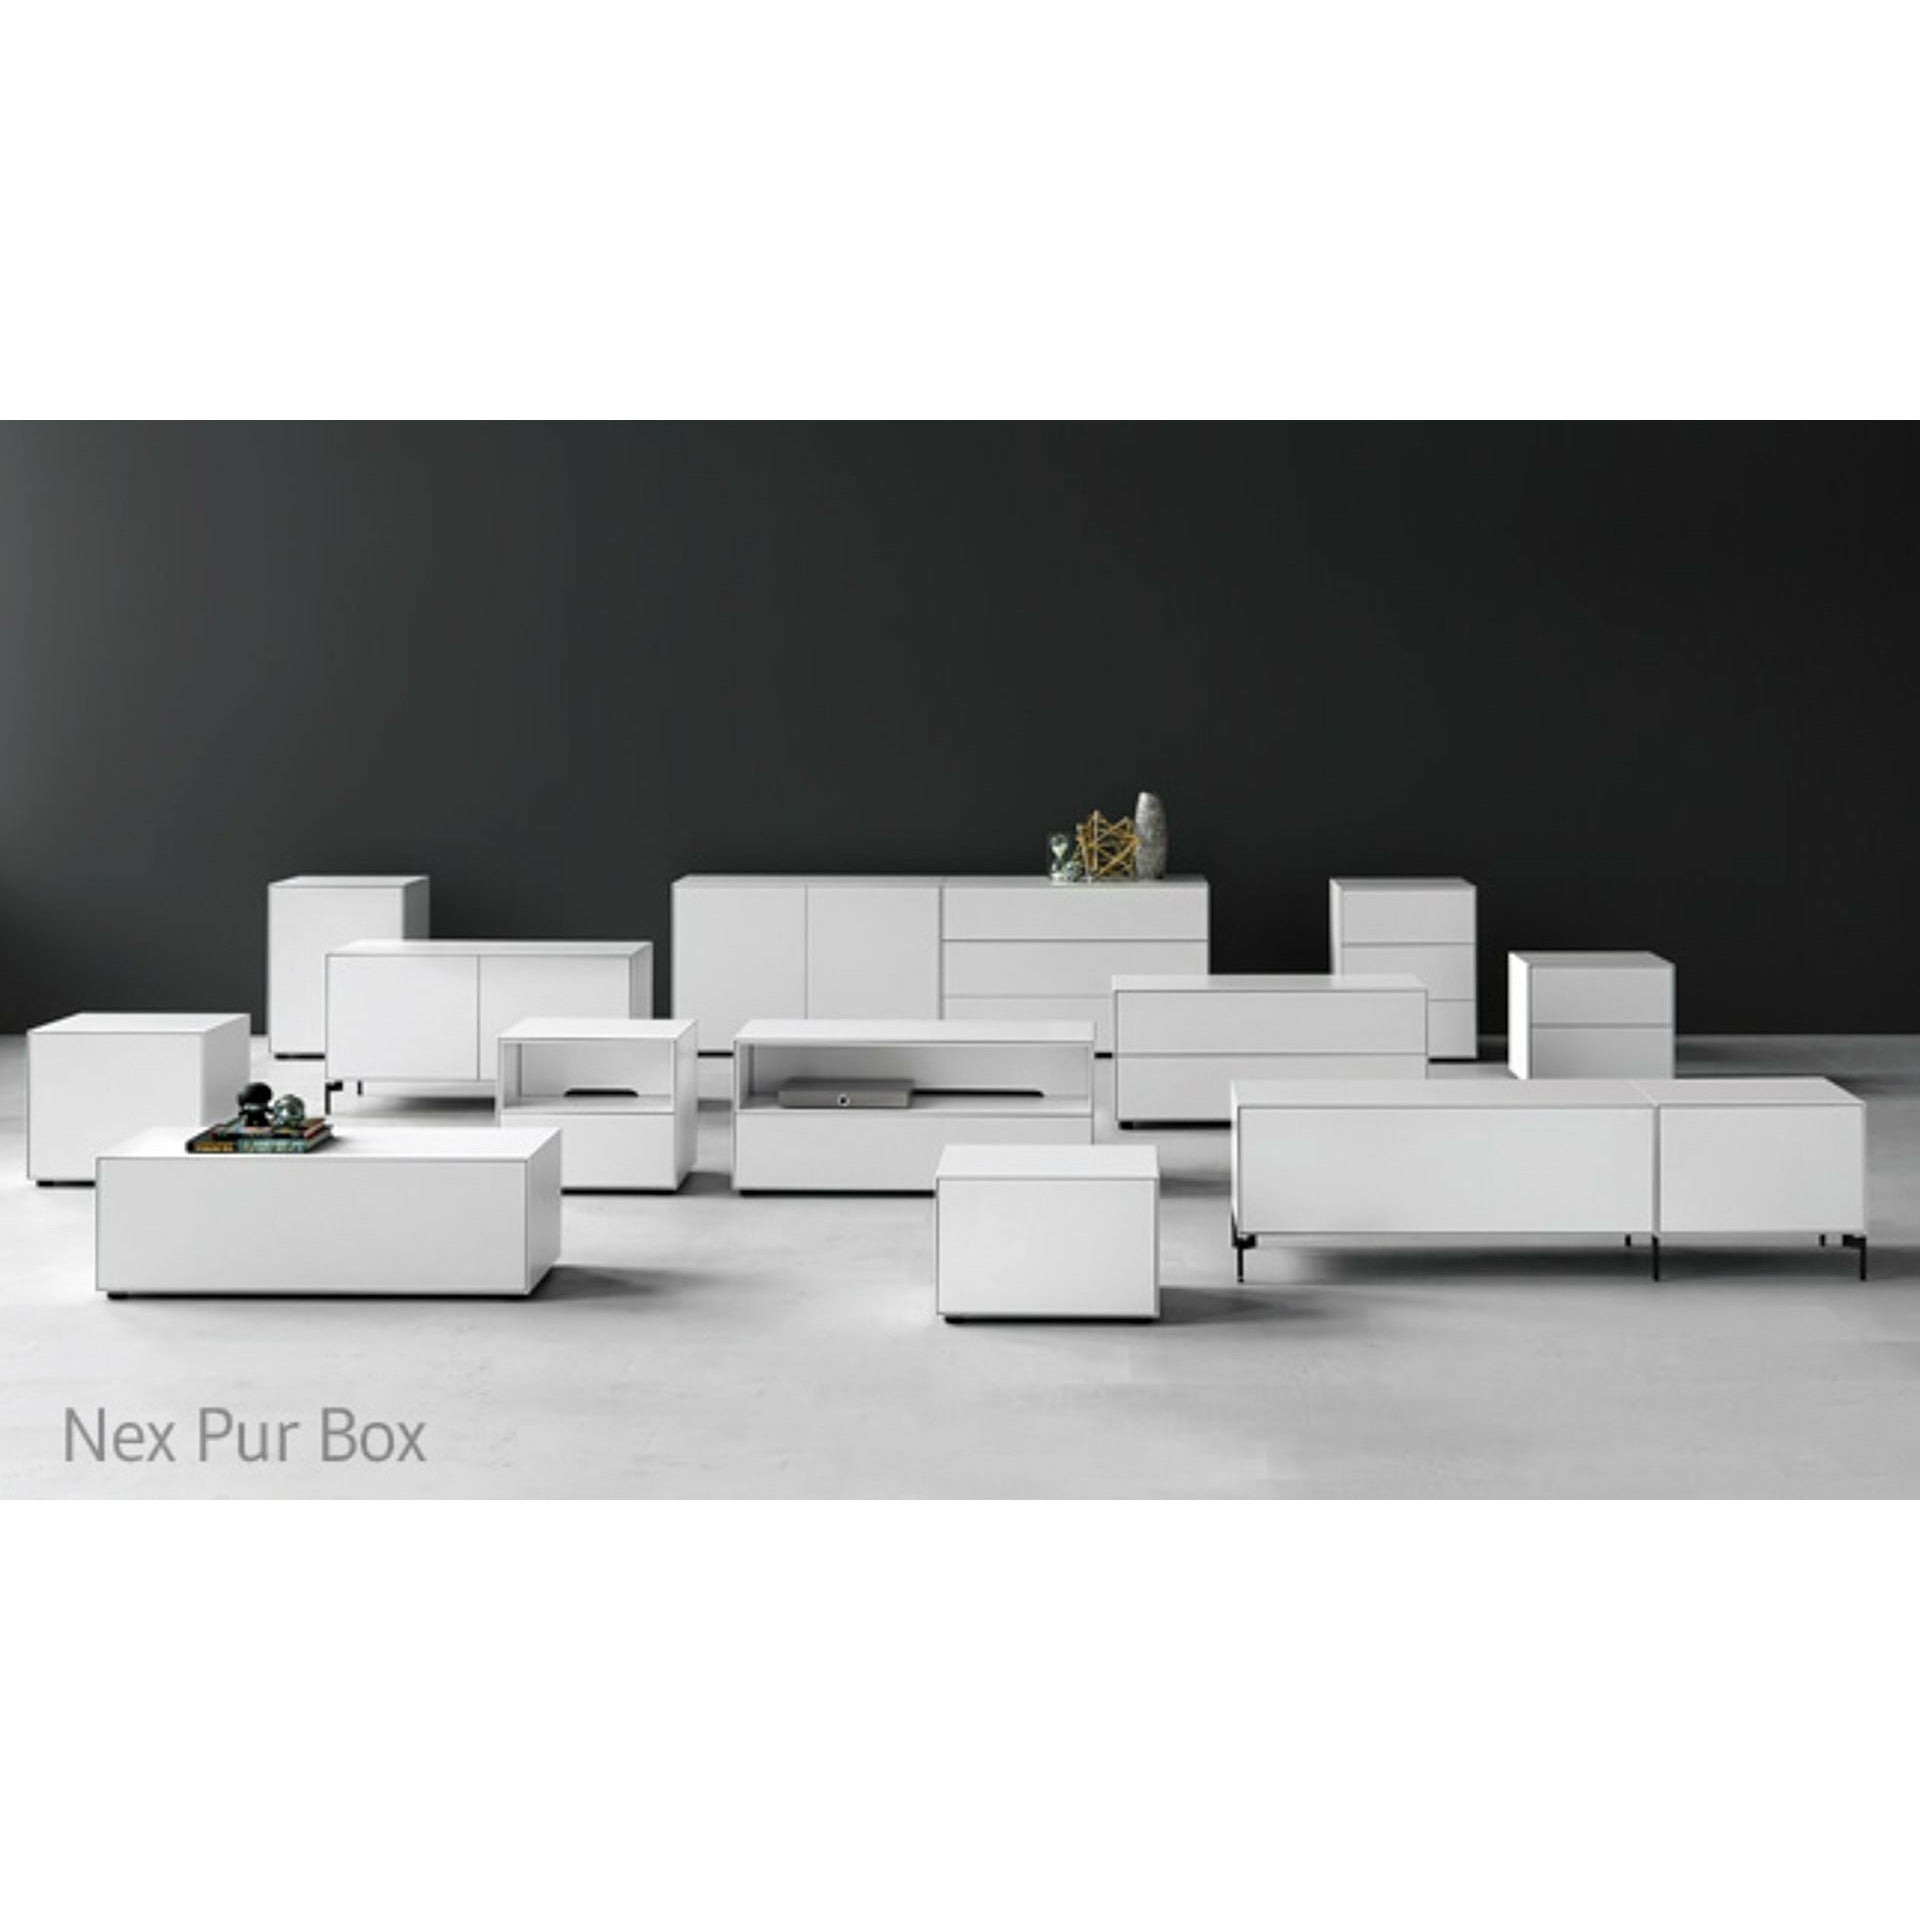 Piure Nex Pur Box Hx W 50x120 cm, 2 cajones